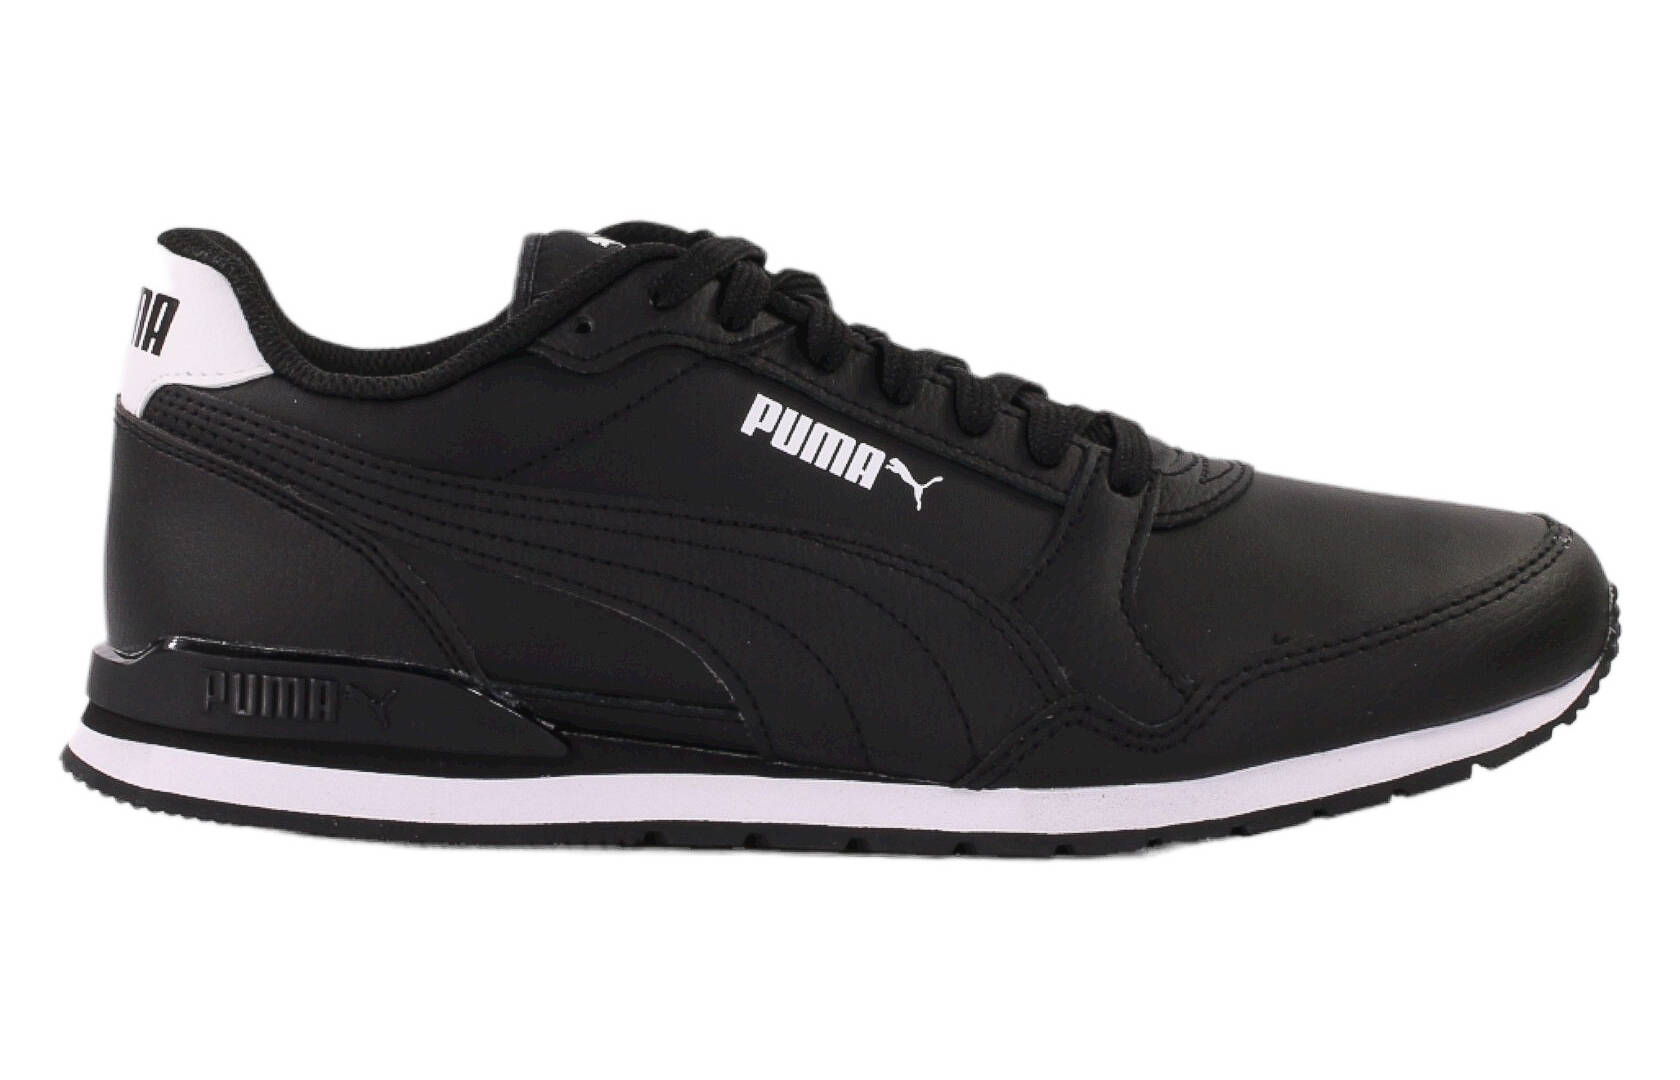 Puma ST Runner v3 L men's shoes 384855 02